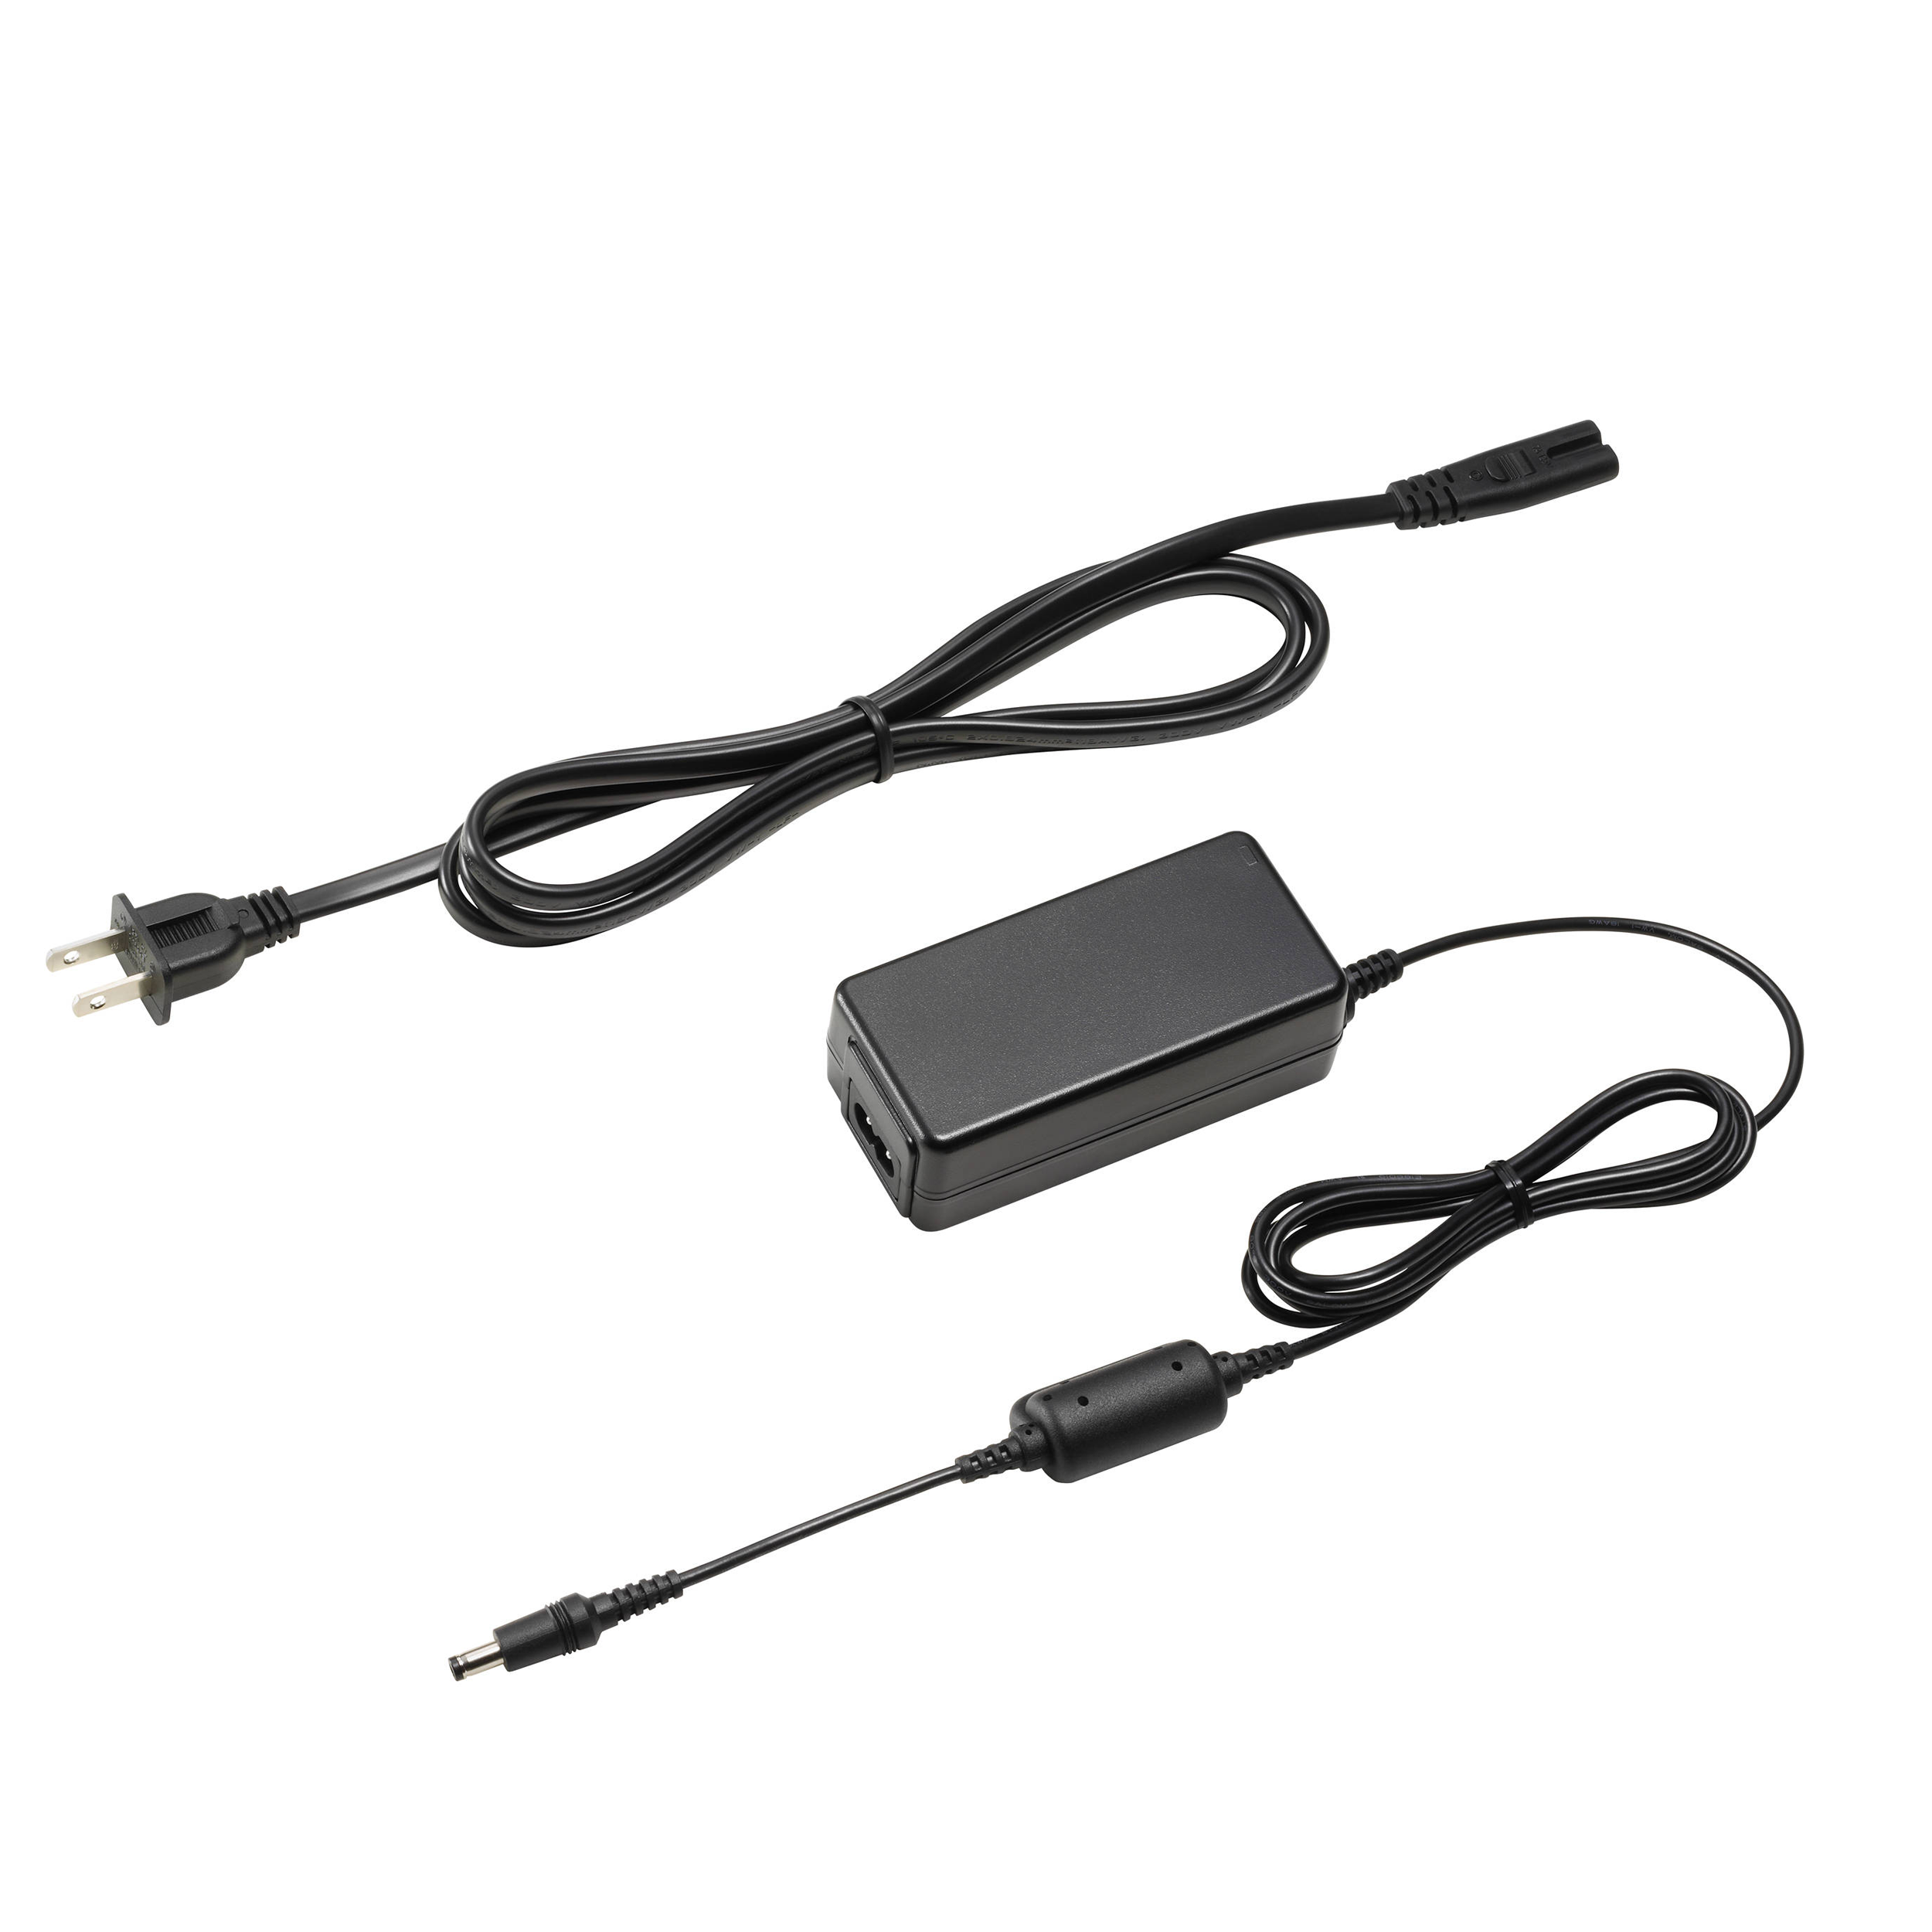 Panasonic DMW-AC10 AC Adapter for LUMIX GH4 and GH5 Digital Cameras